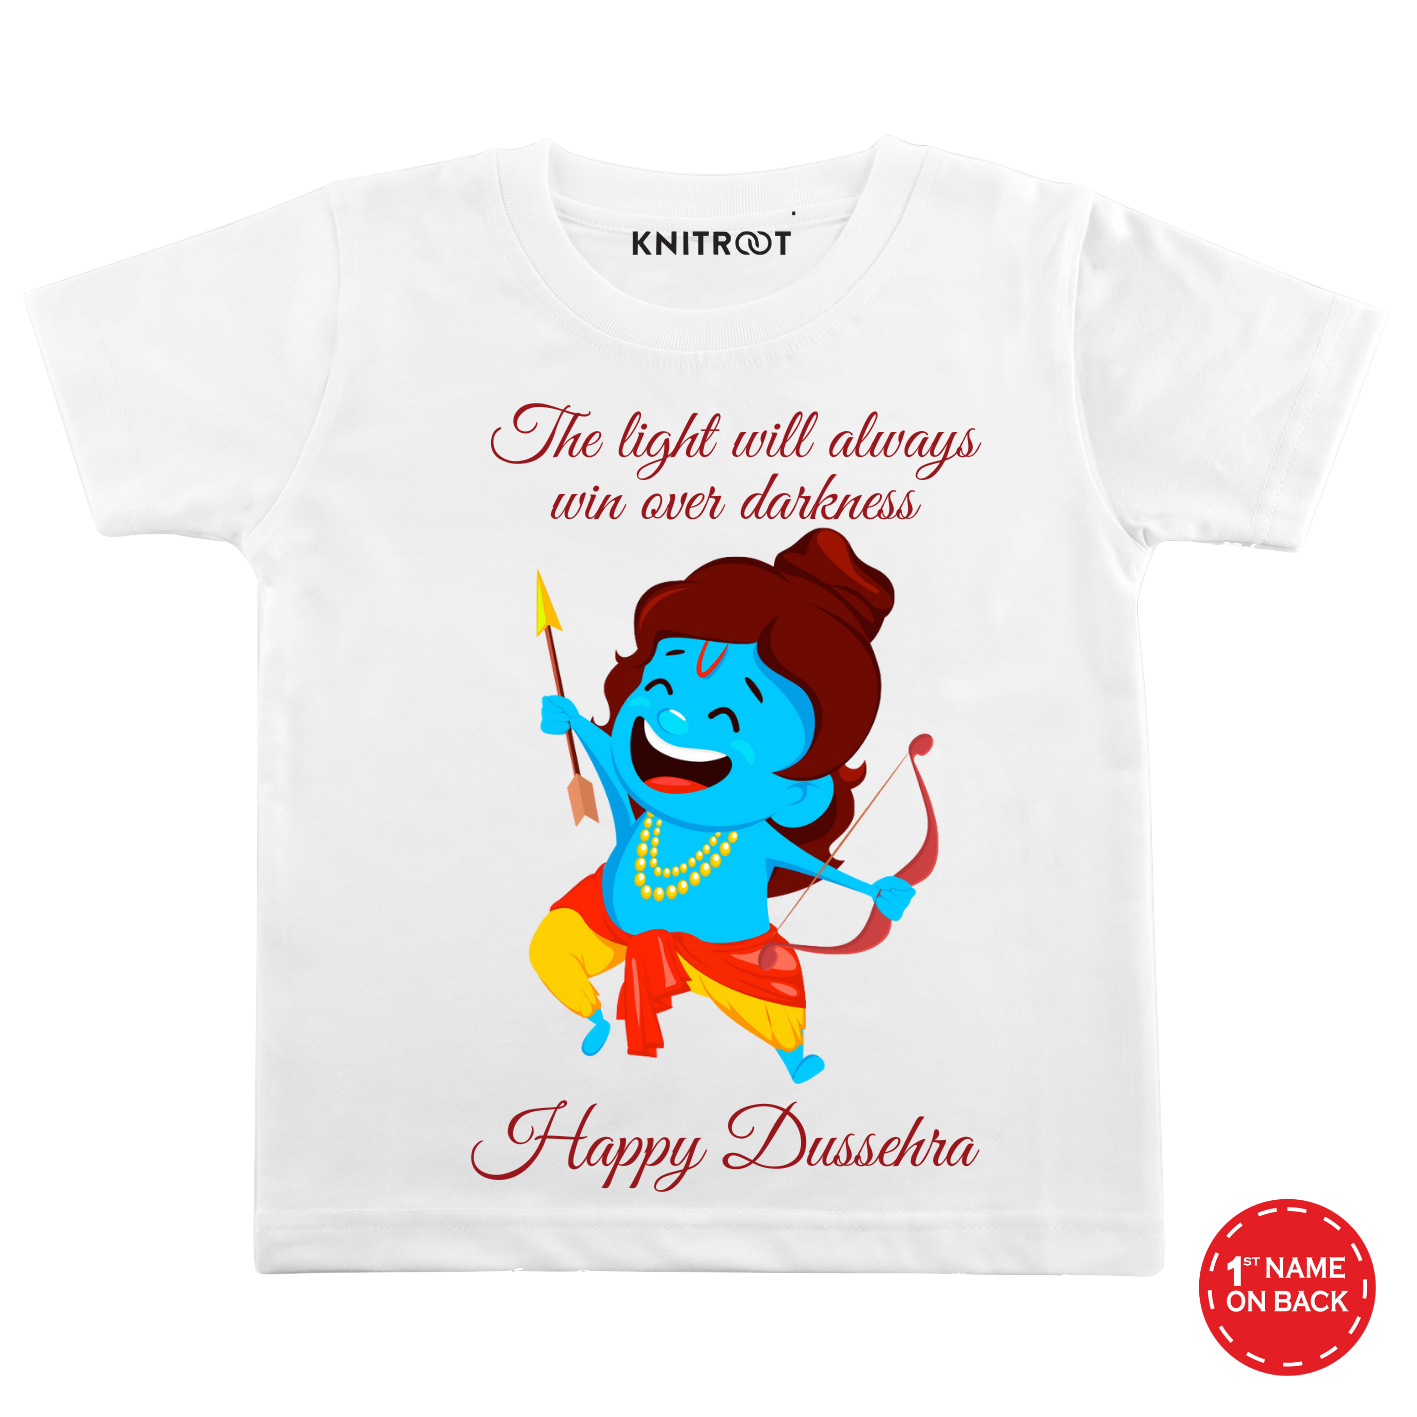 Happy Dussehra (The Light Will Always Win Over Darkness)